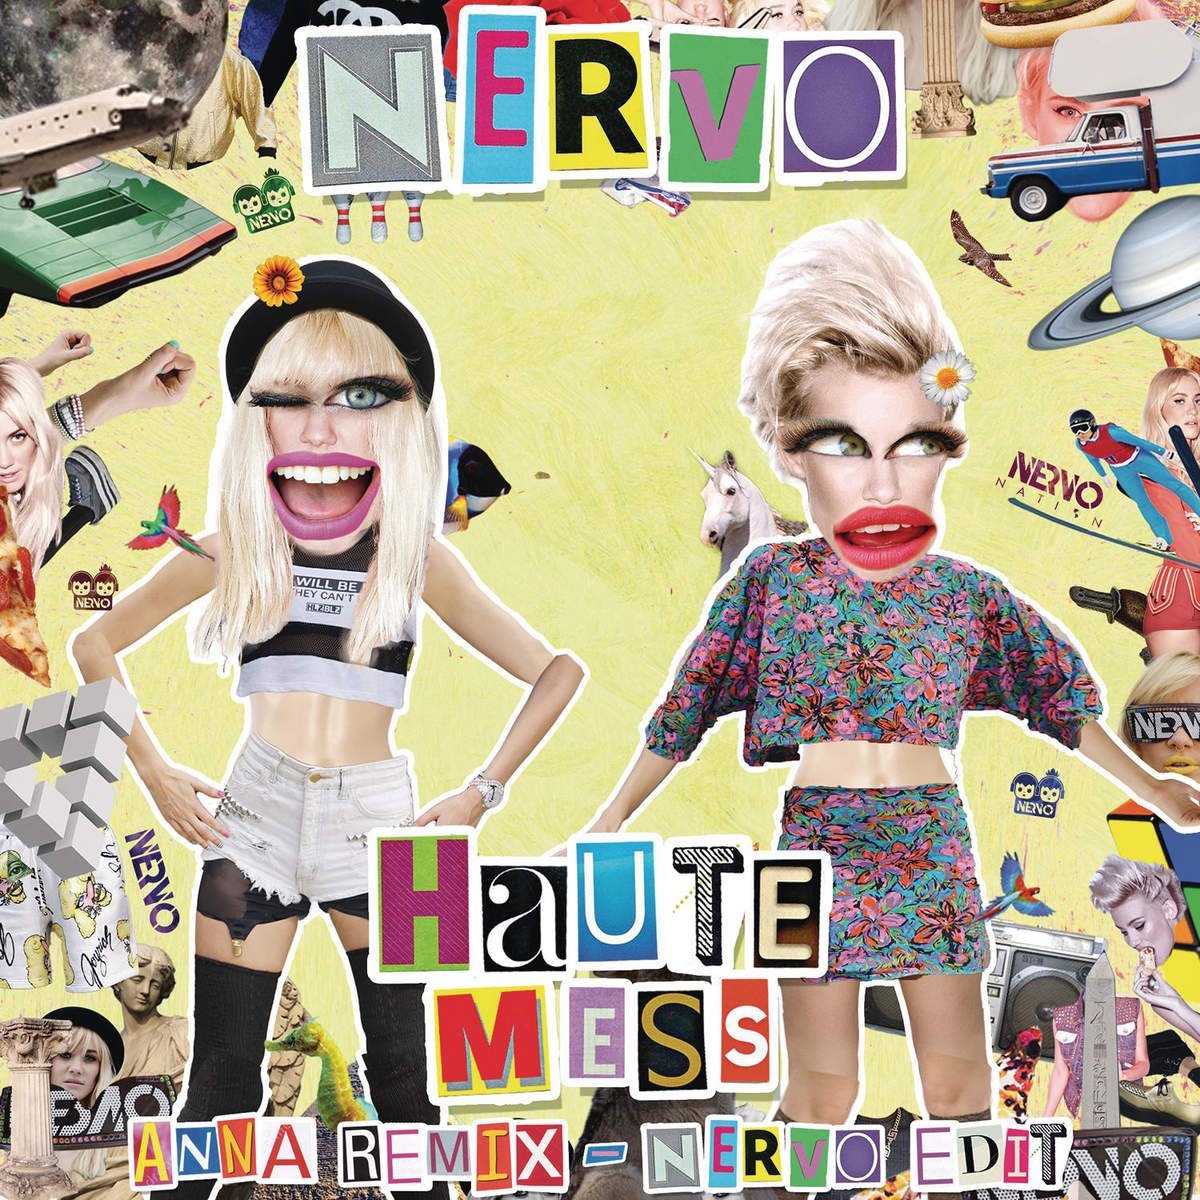 Haute Mess (ANNA Remix) [NERVO Edit]